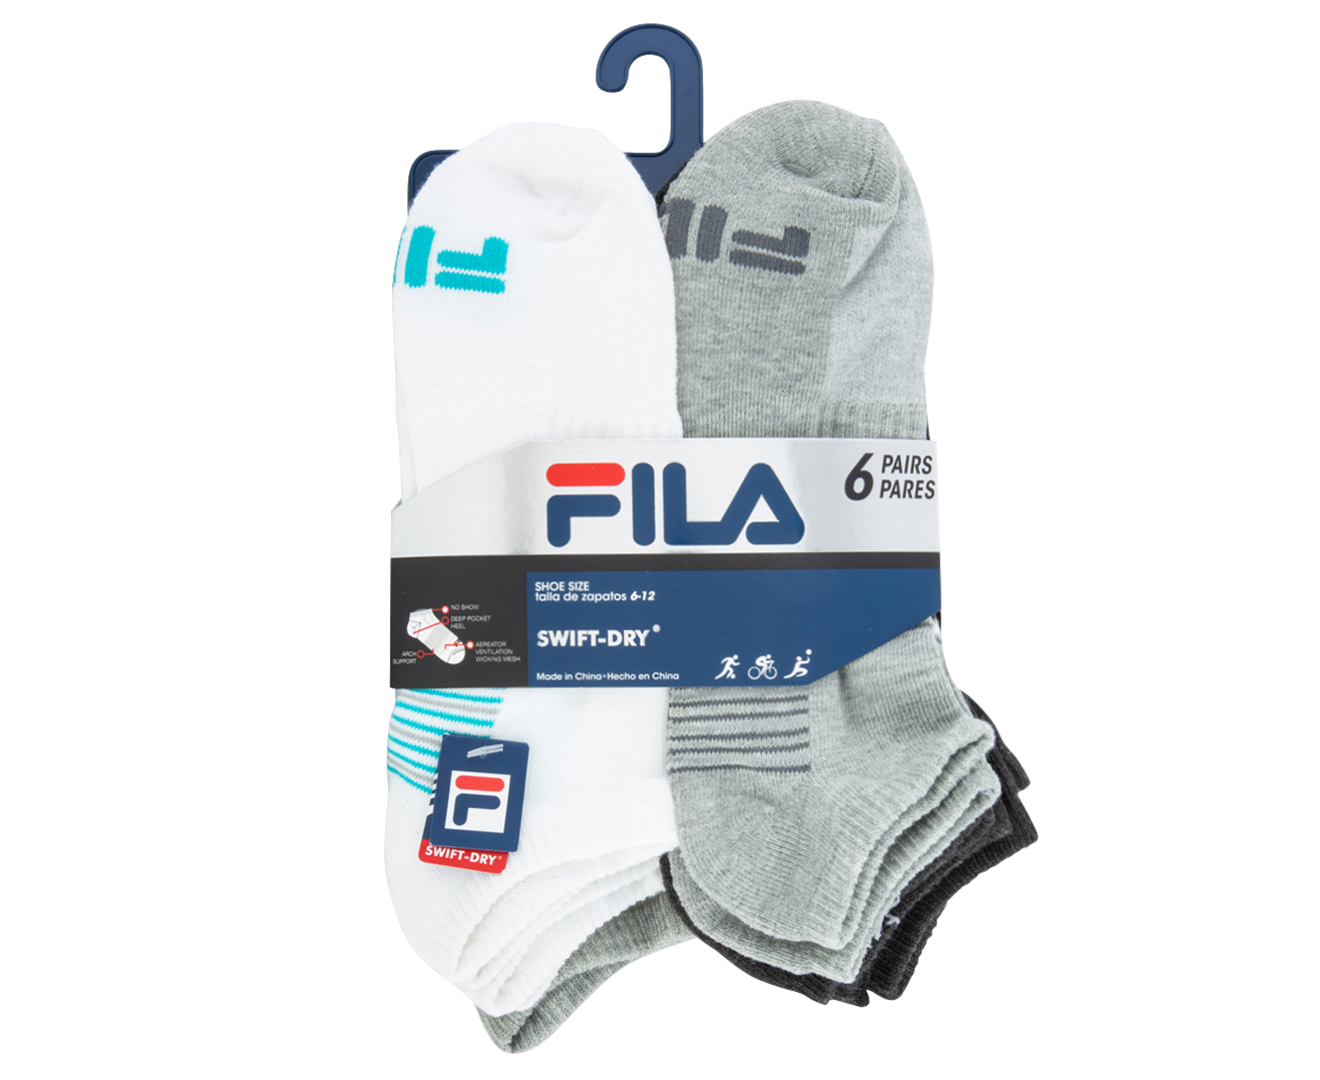 FILA Men's Size 6-12 Half Cushioned No Show Sock 6-Pack - Grey/White ...